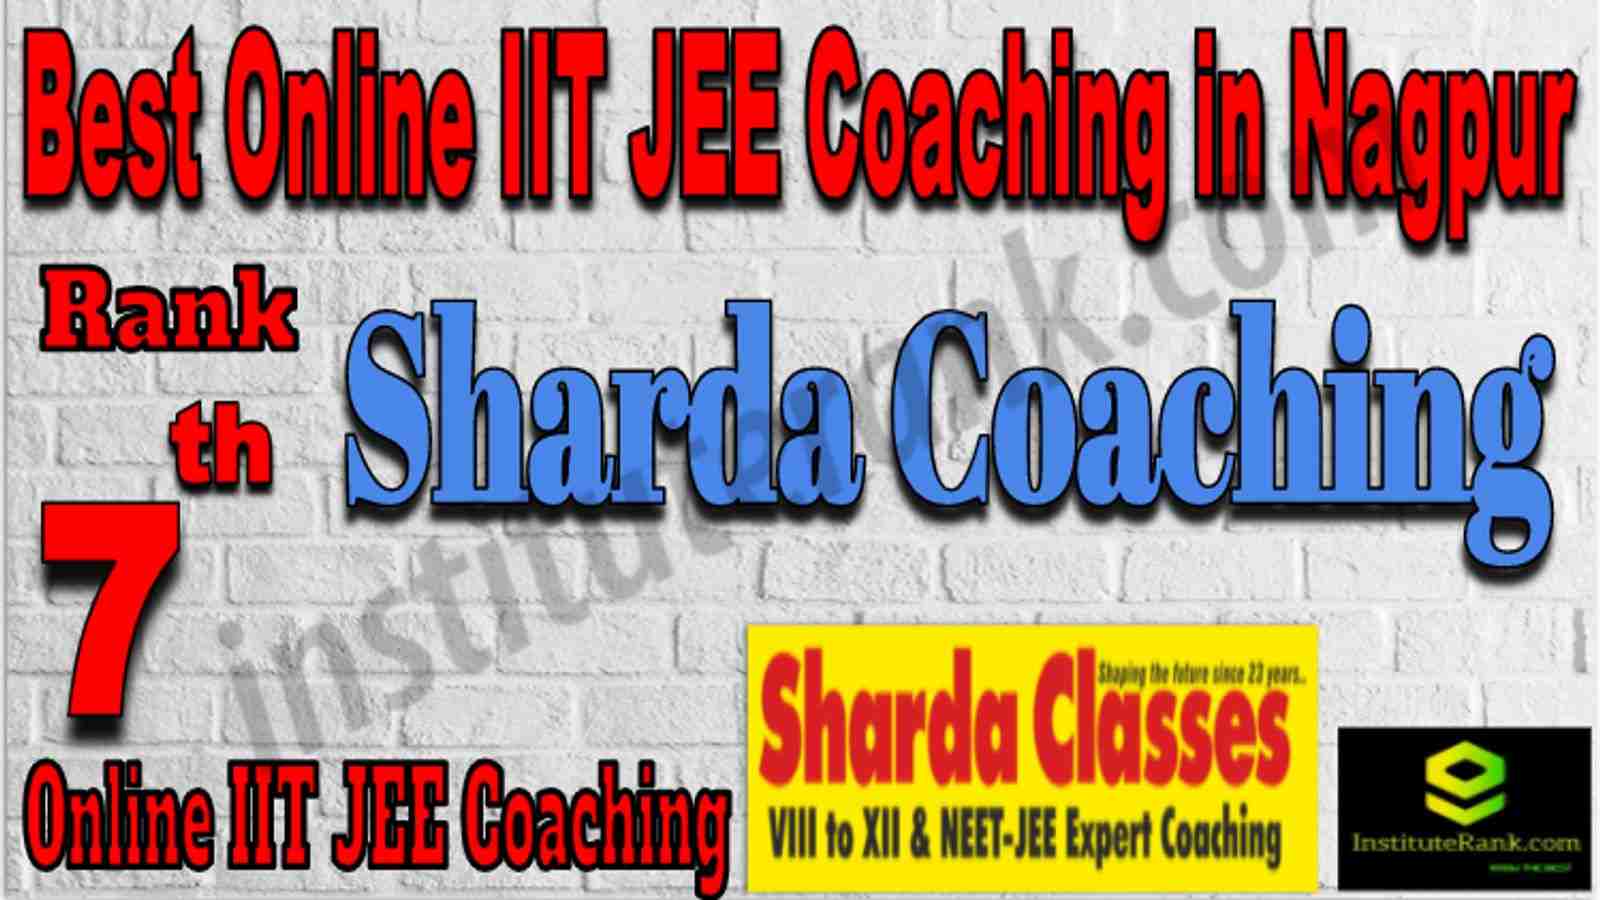 Rank 7 Best Online IIT JEE Coaching in Nagpur